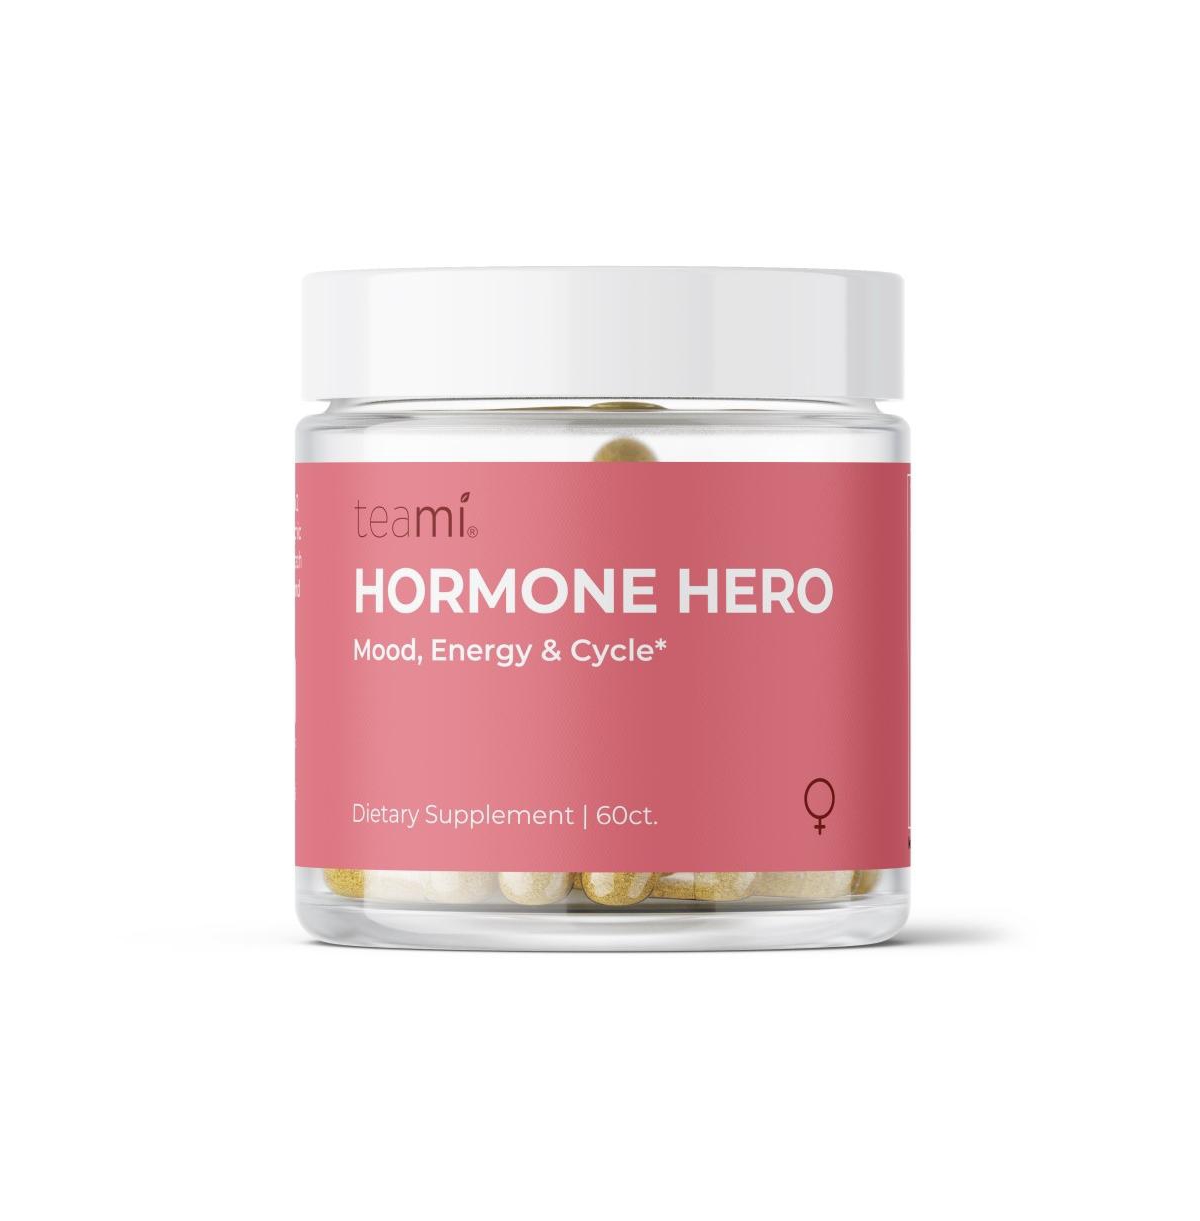 Hormone Hero Supplement - Pms Relief, Energy, Better Mood - 3.2 Oz, 60 Count Capsule - Natural